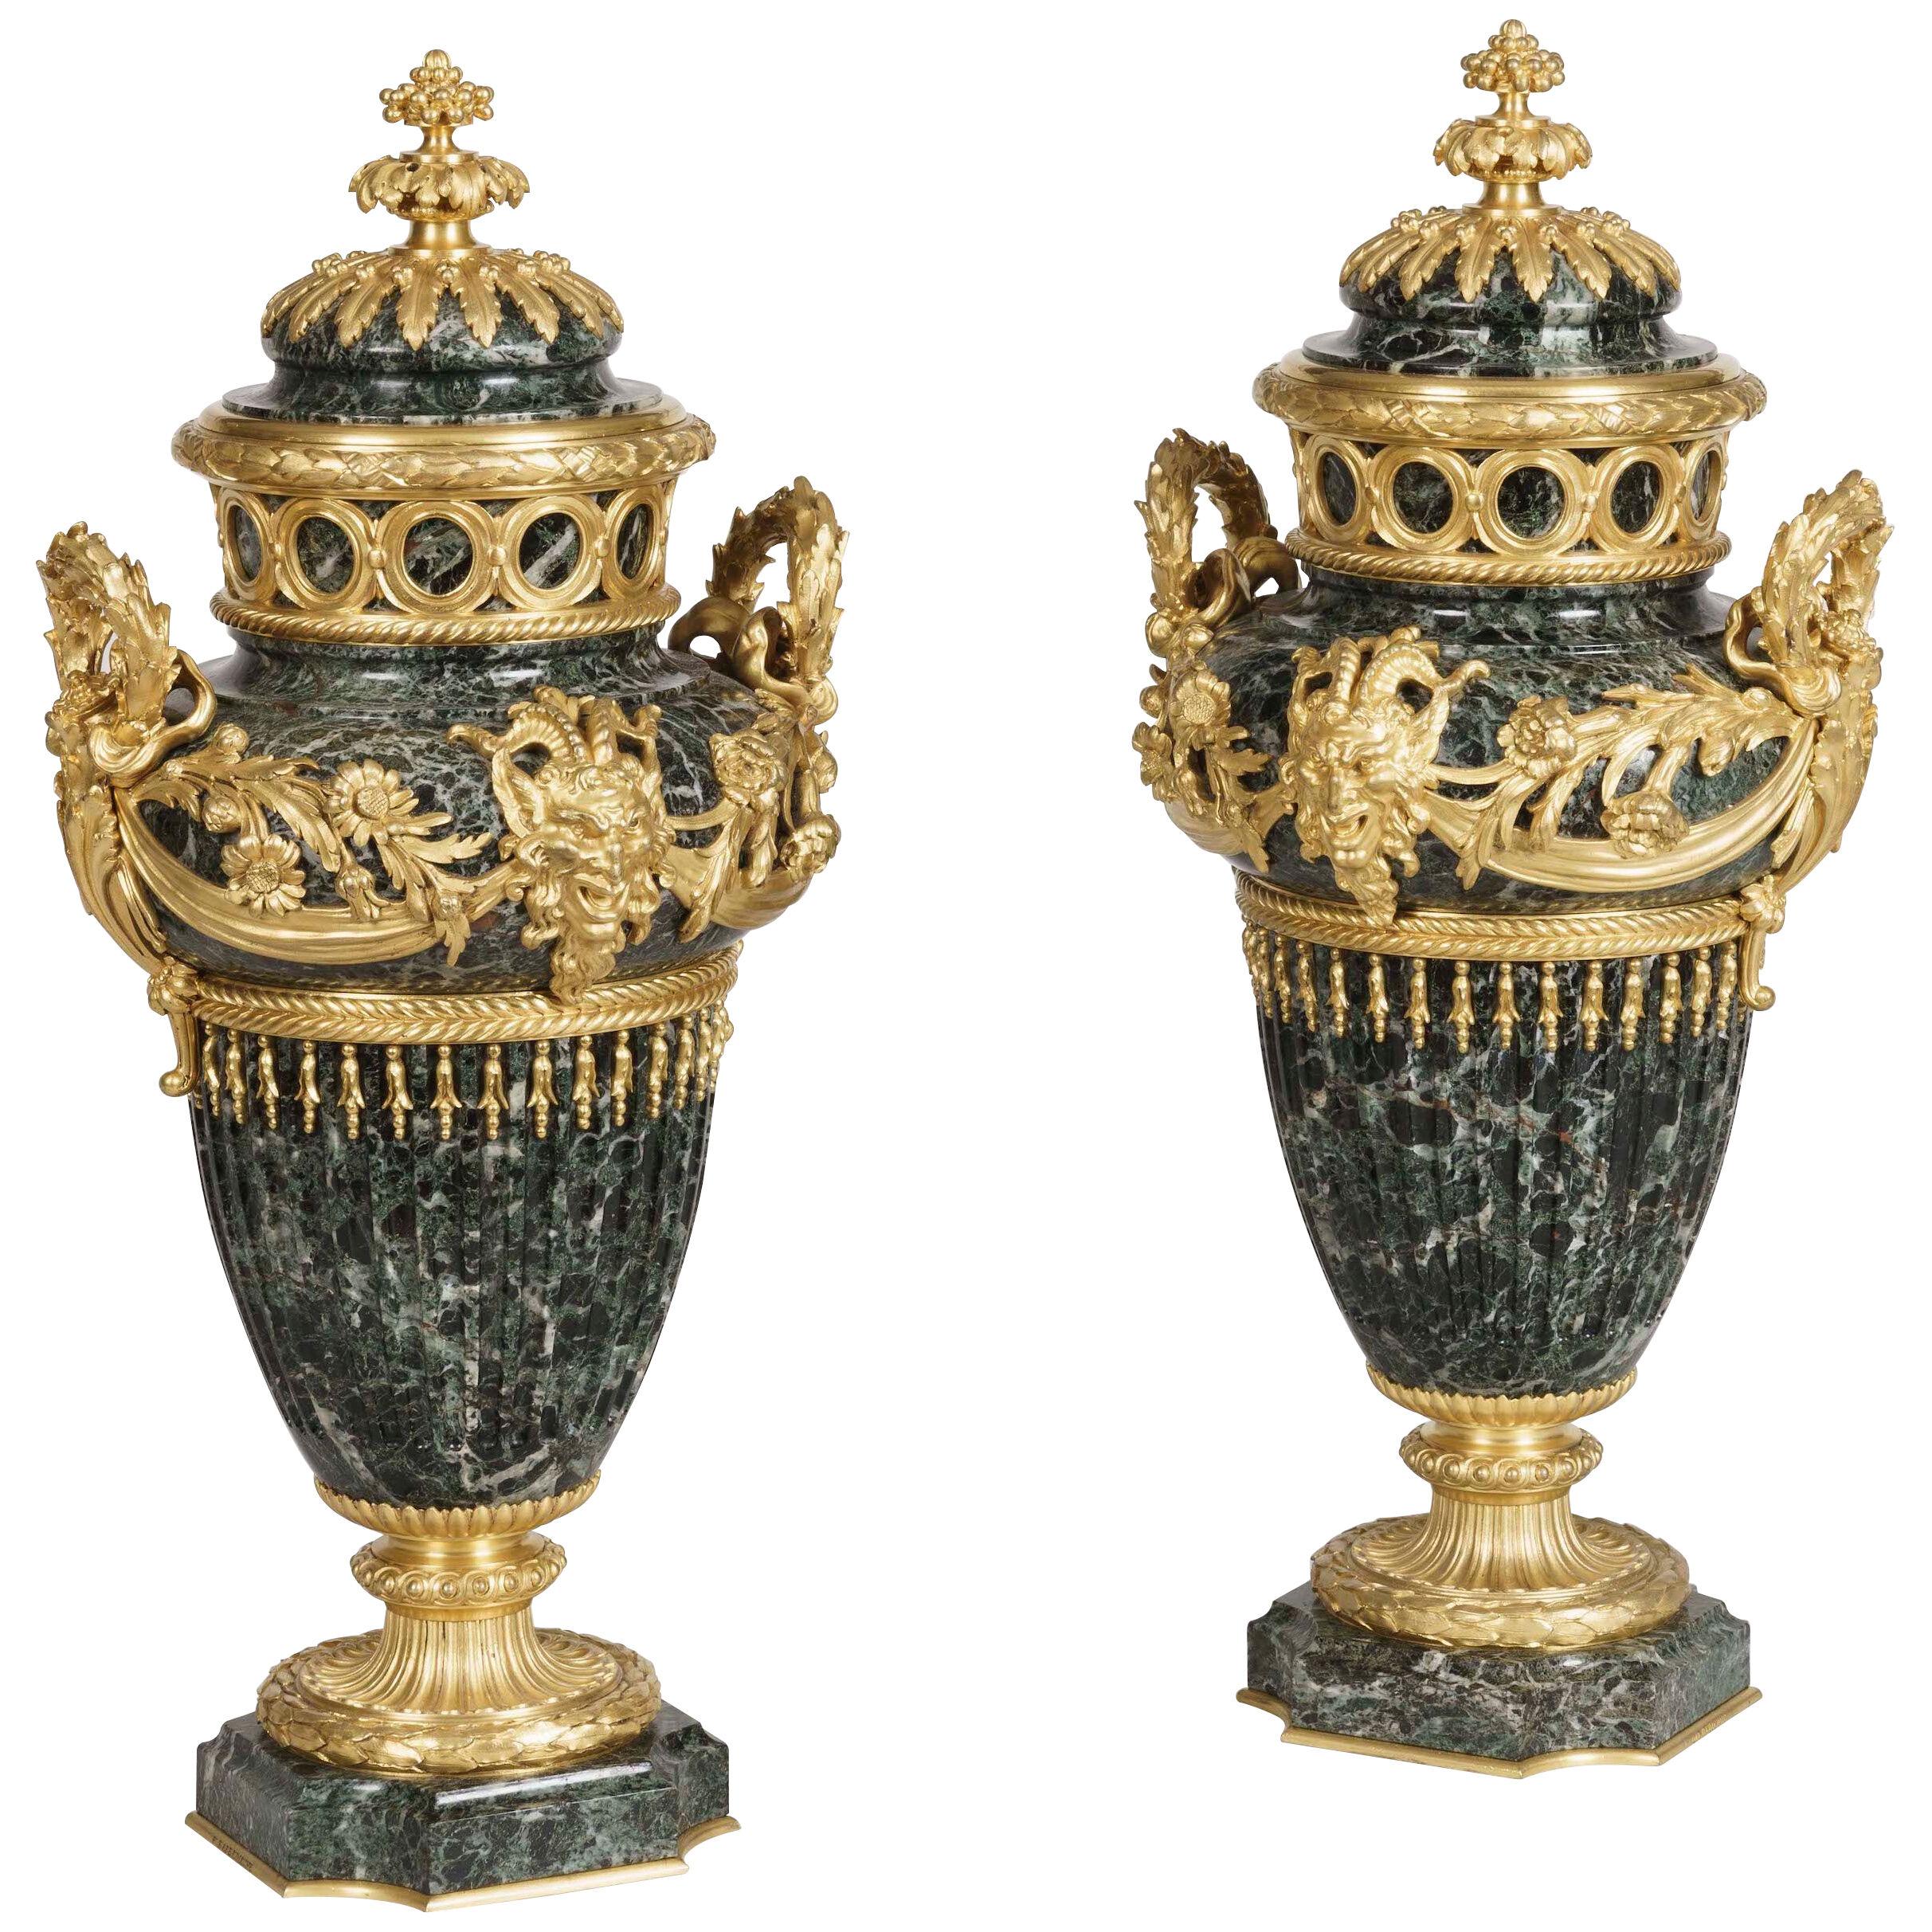  Pair of Marble and Ormolu Decorative Vases by Barbedienne